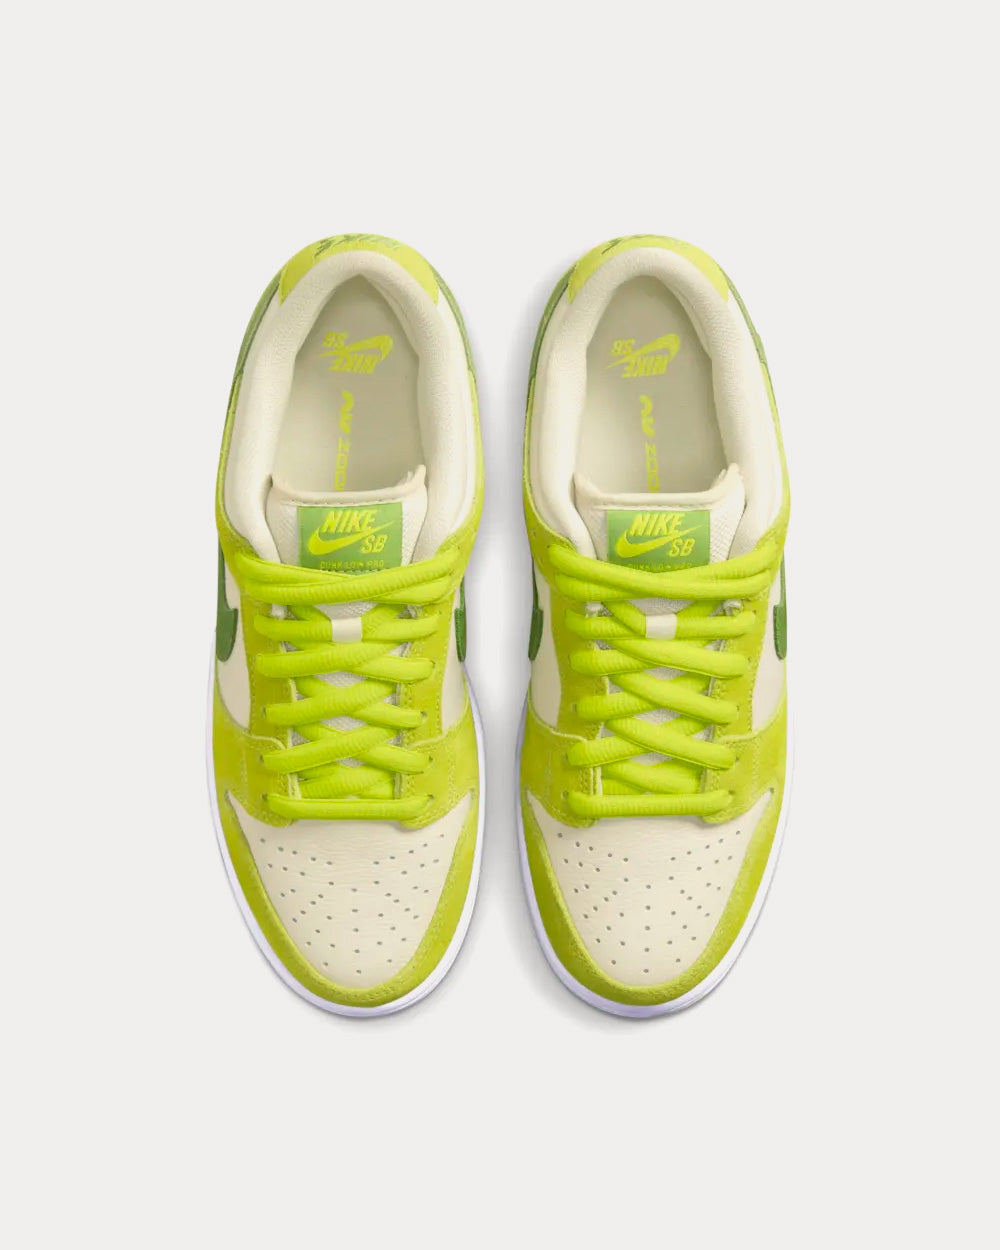 Nike SB Dunk Low Sour Apple Low Top Sneakers - Sneak in Peace